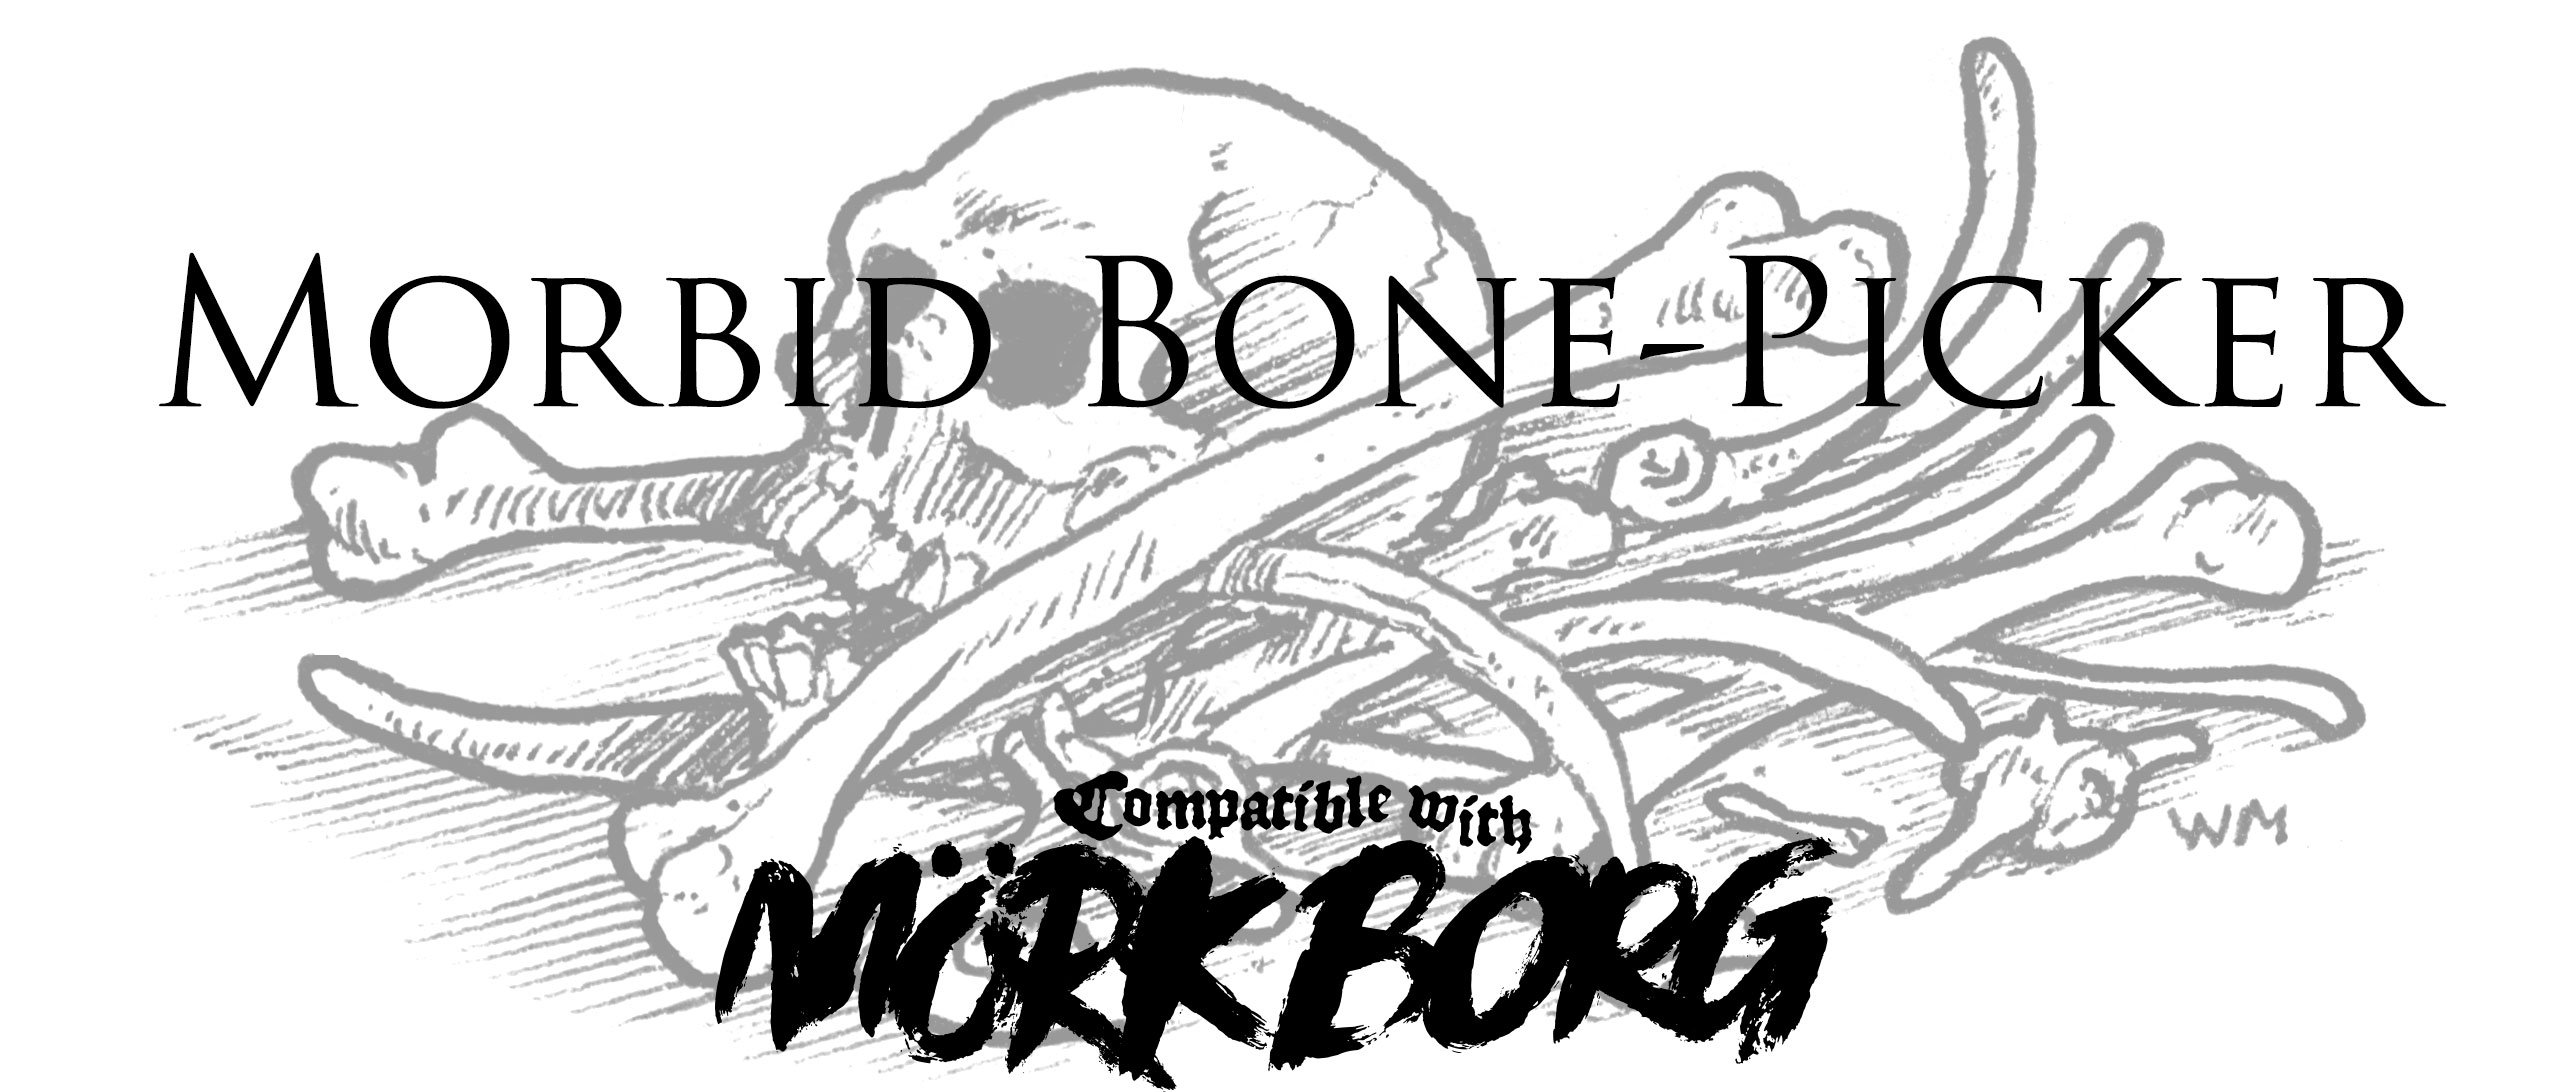 Morbid Bone-Picker